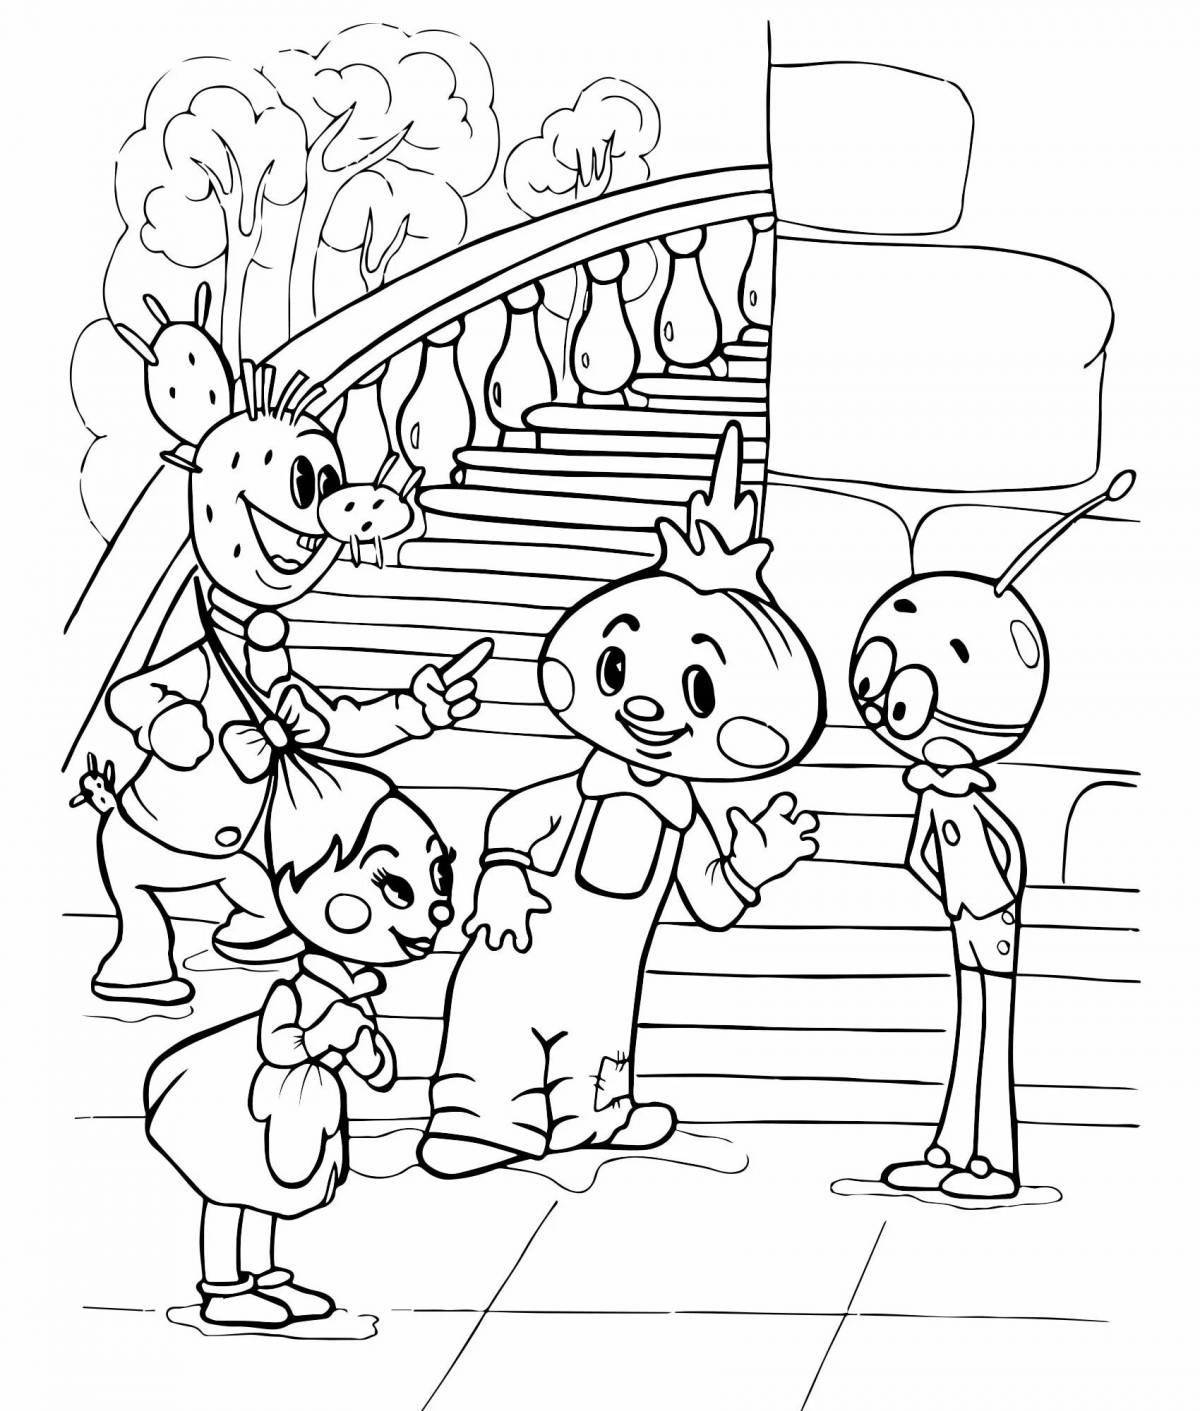 Fun chipollino coloring book for kids